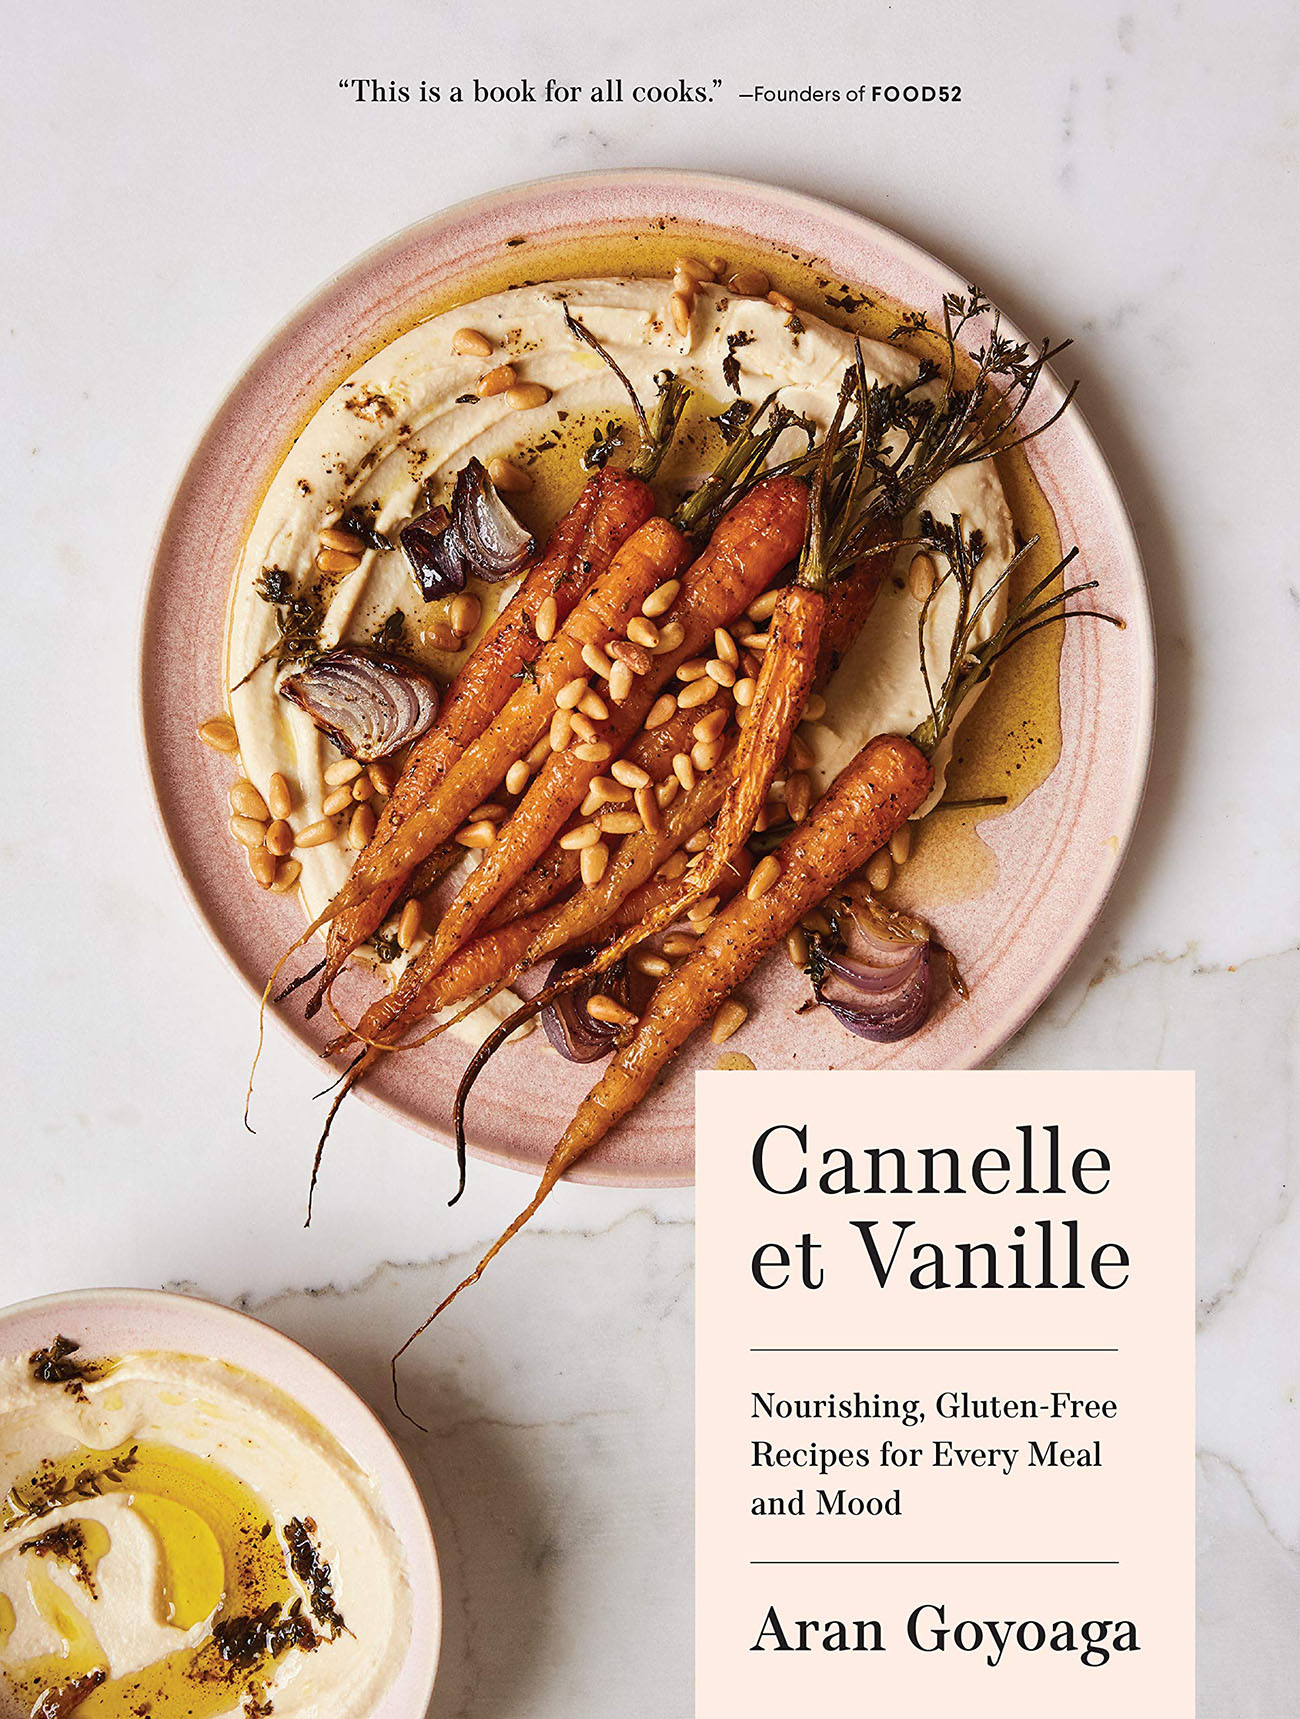 Cannelle et Vanille cookbook